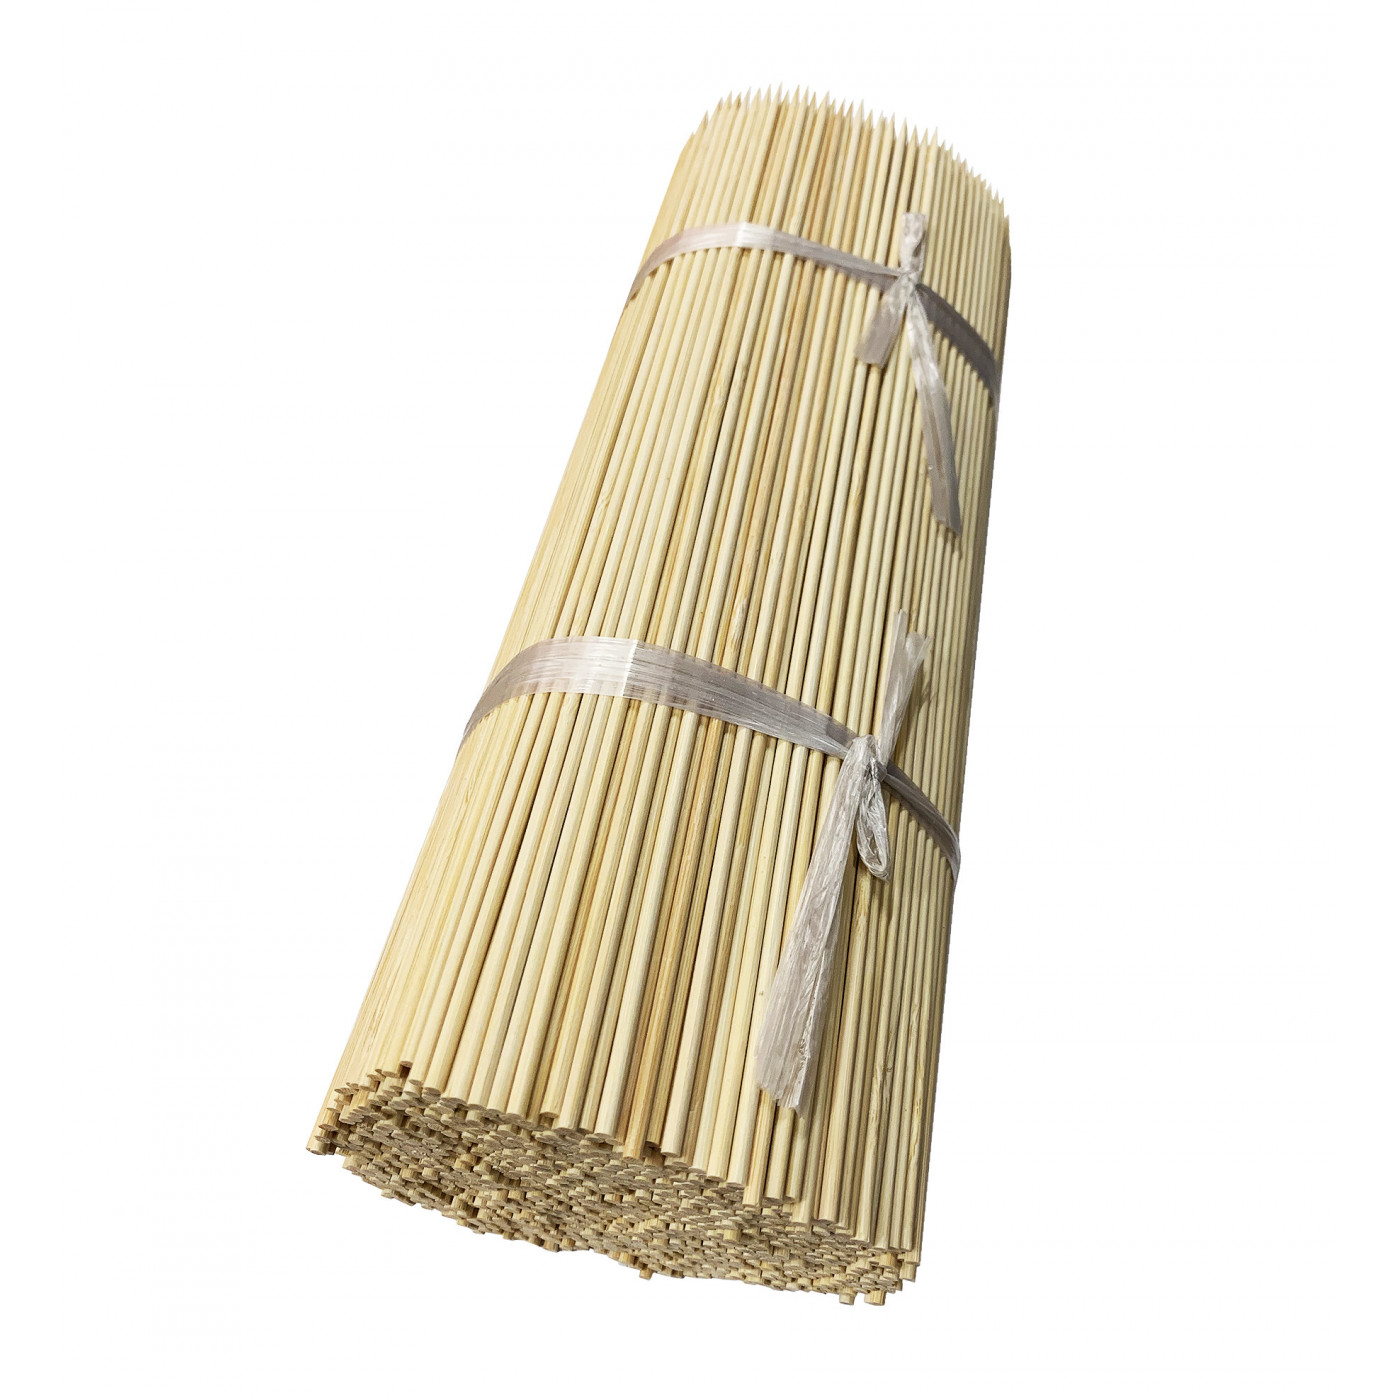 Set of 500 bamboo sticks (5 mm x 40 cm)